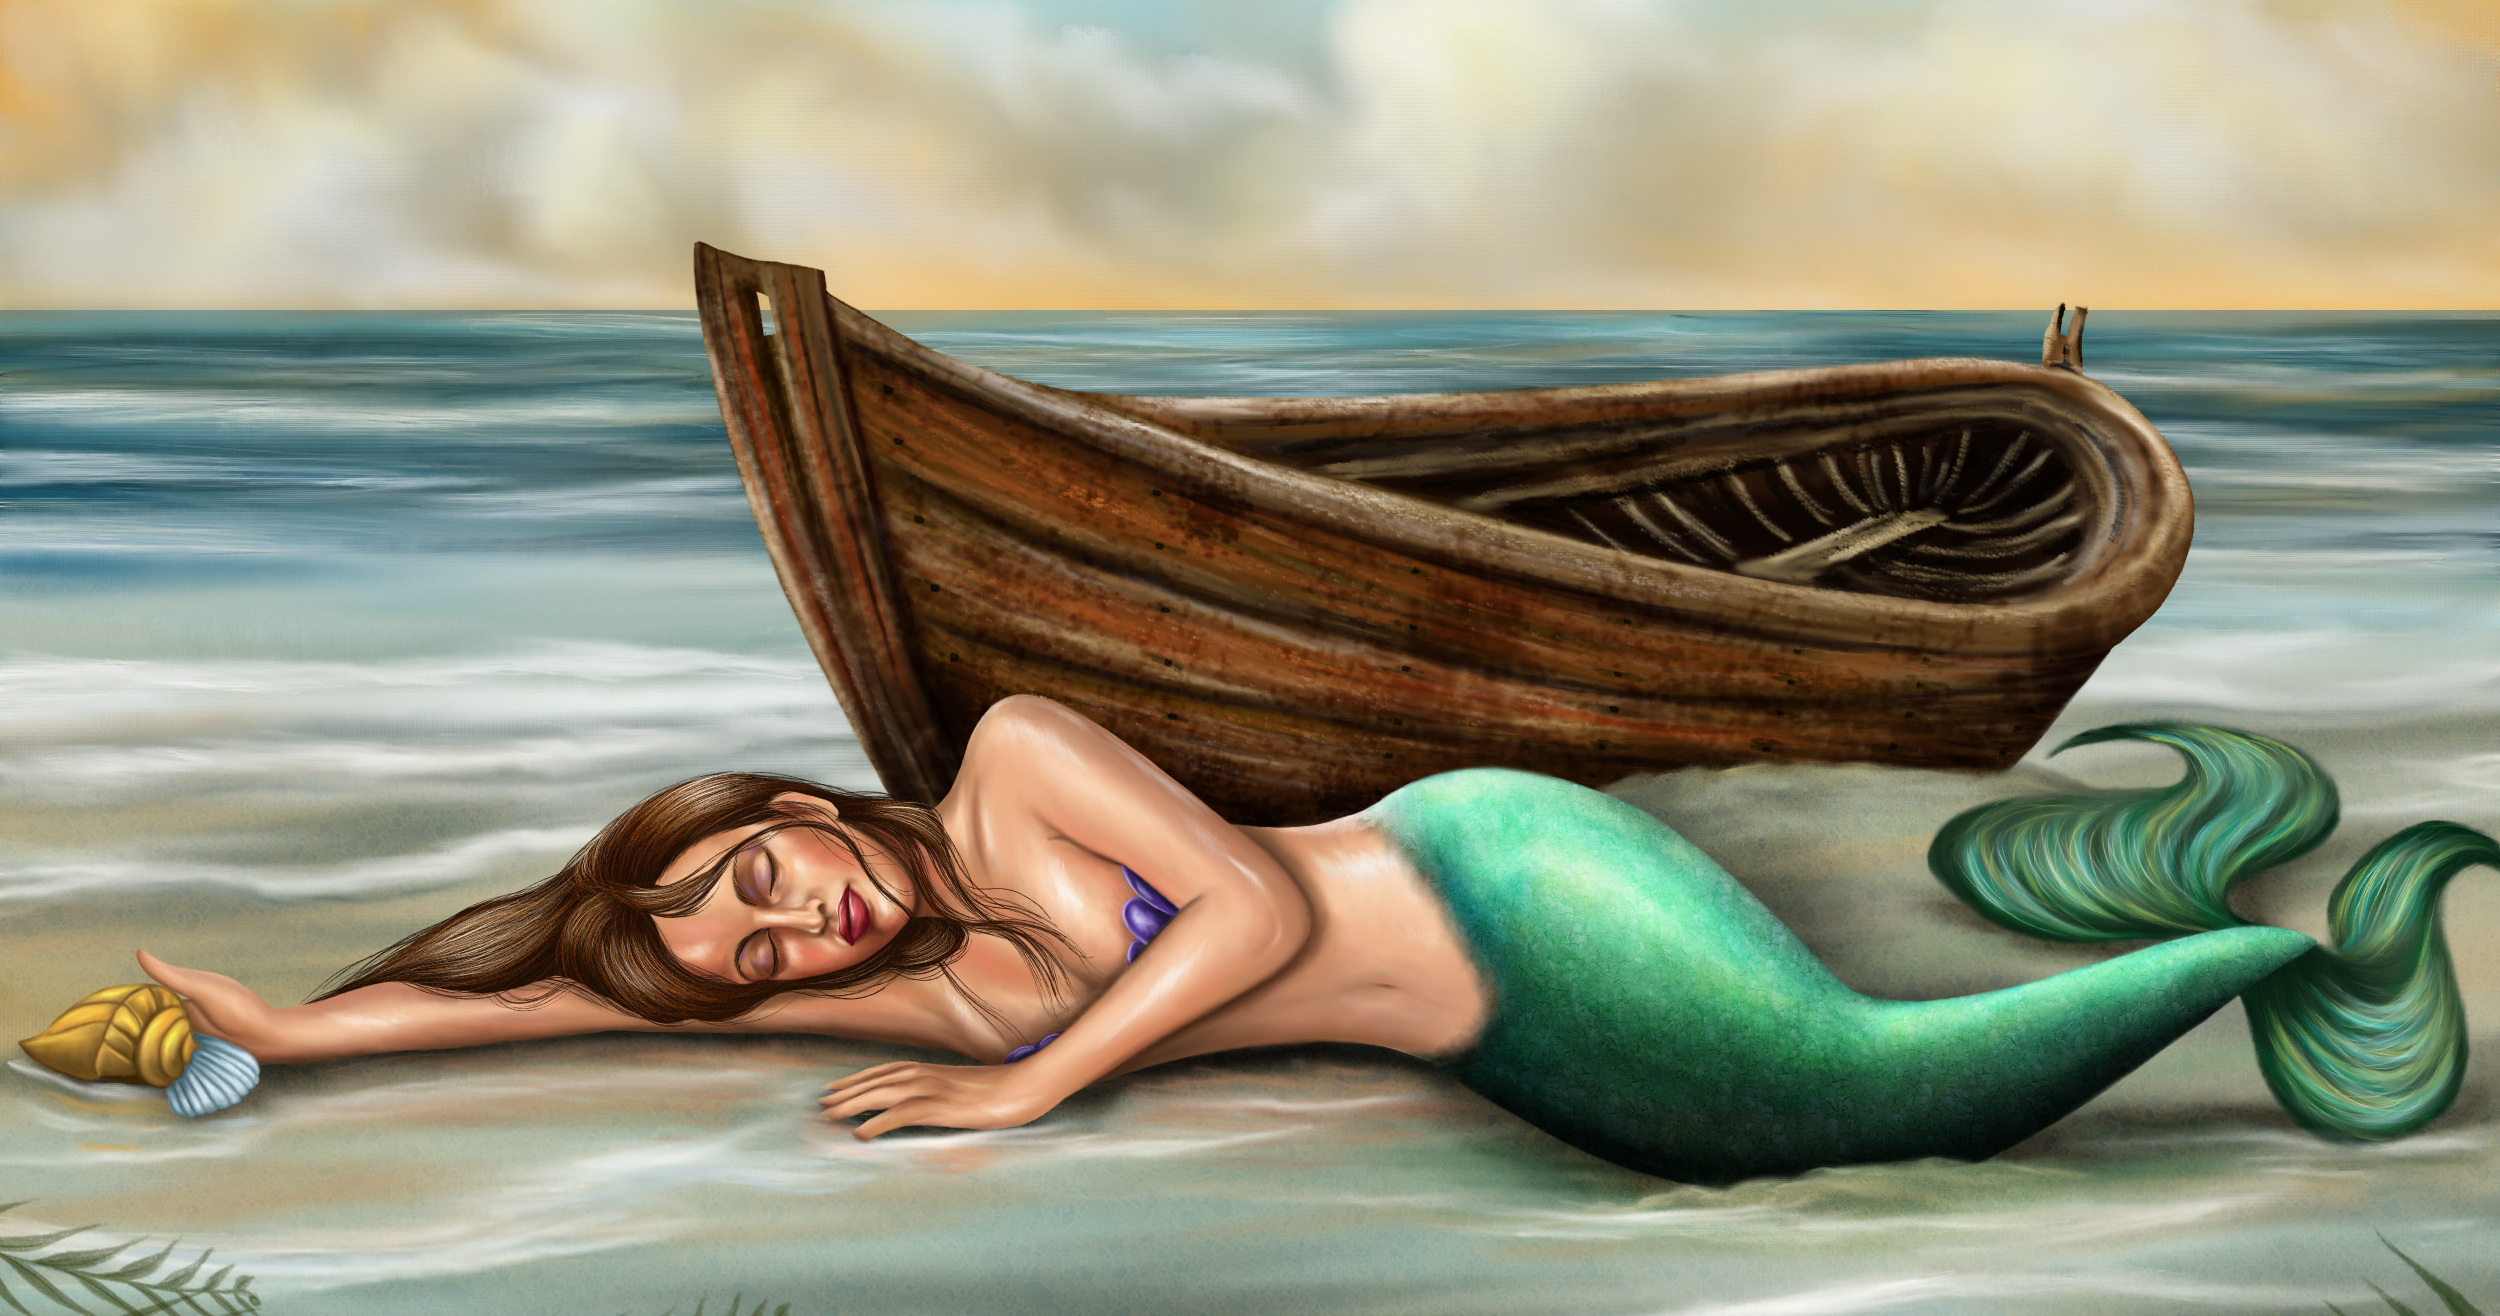 mermaid, Painting, Art, Boats, Fantasy Wallpaper